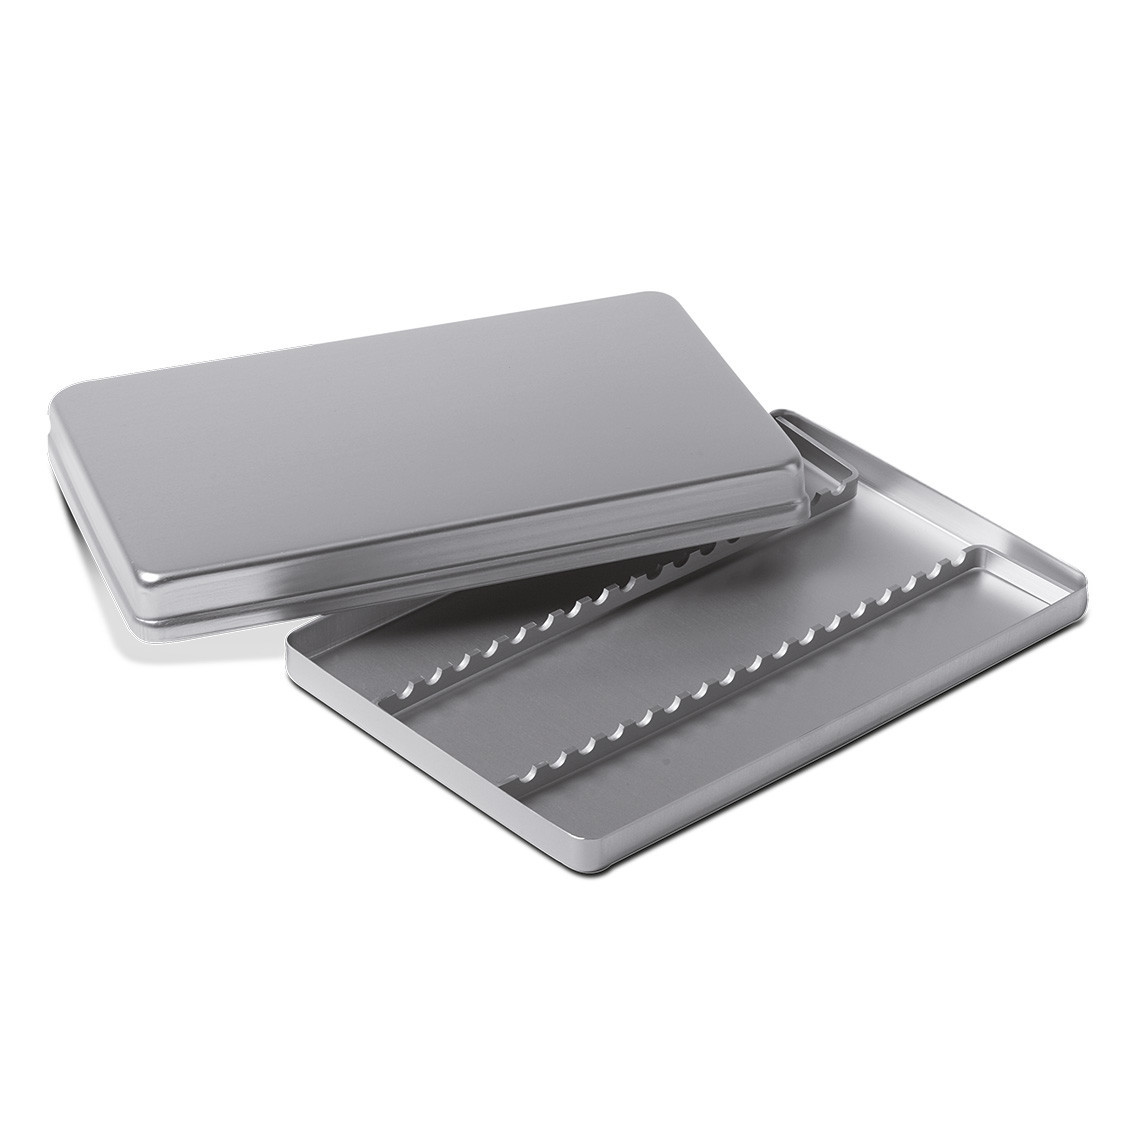 Rectangular aluminium instrument tray with lid